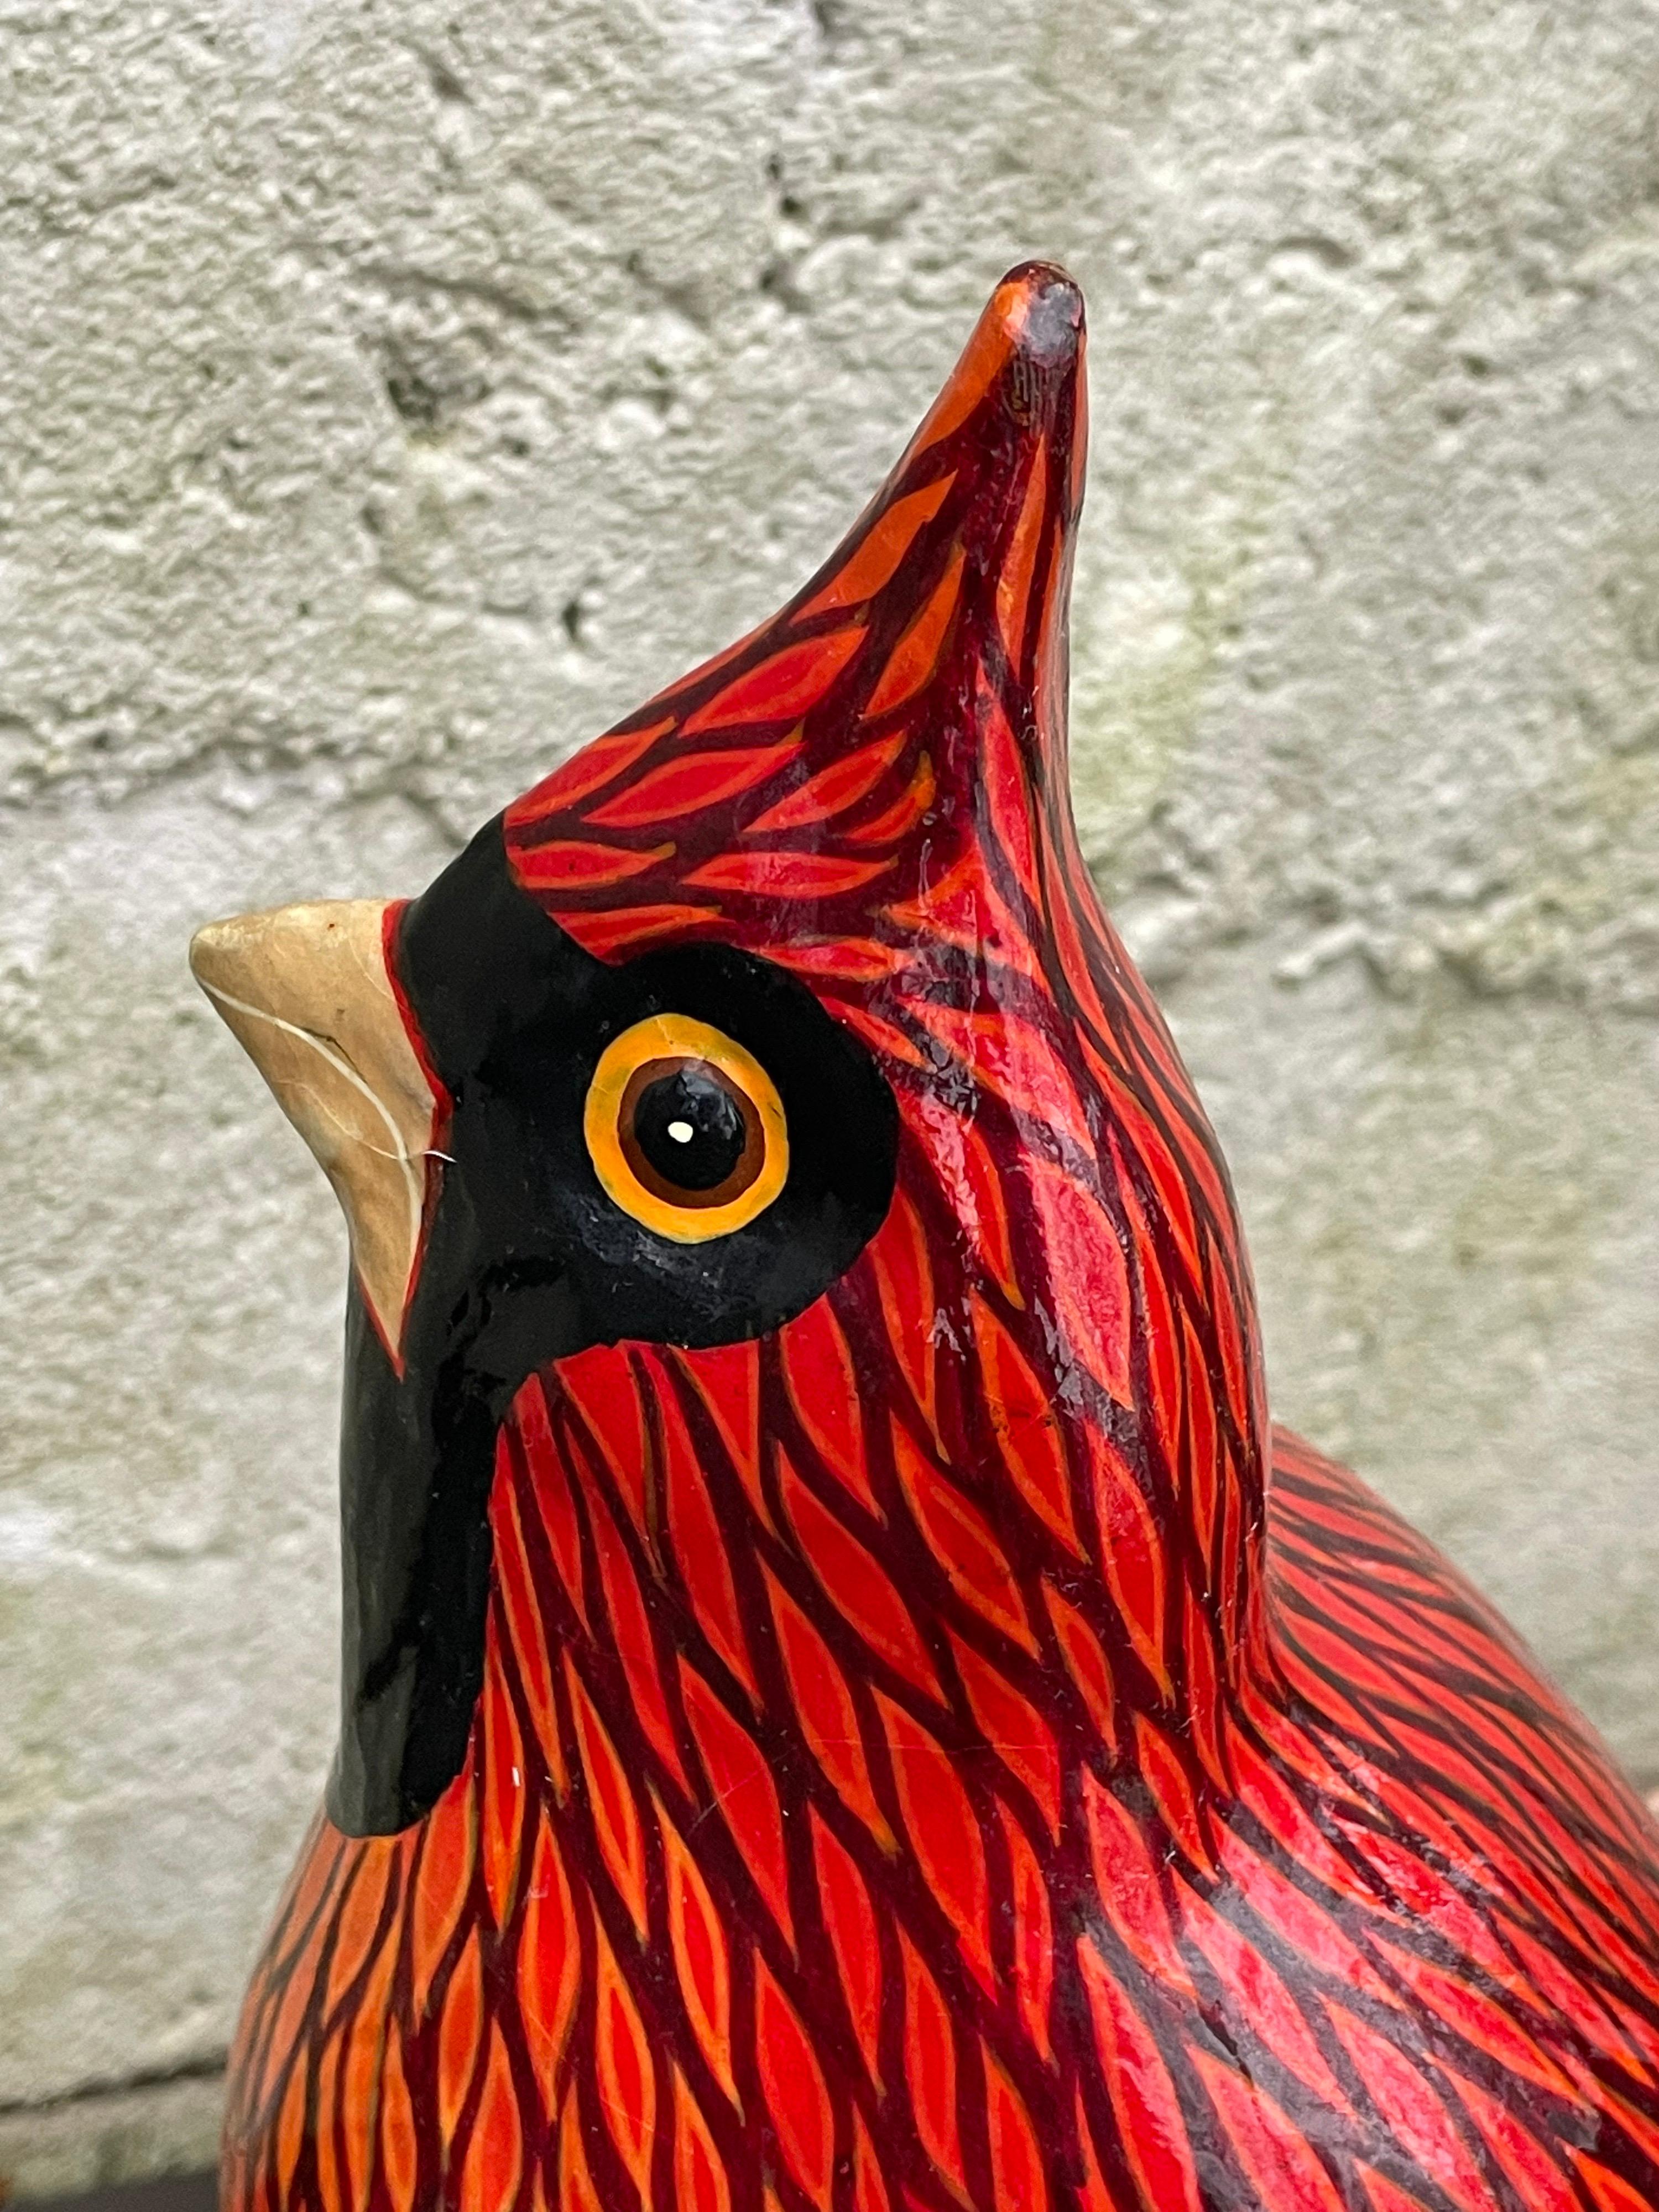 Mid-Century Modern Mid Century Red Cardinal Bird Sculpture by Mexican Artist Sergio Bustamante For Sale